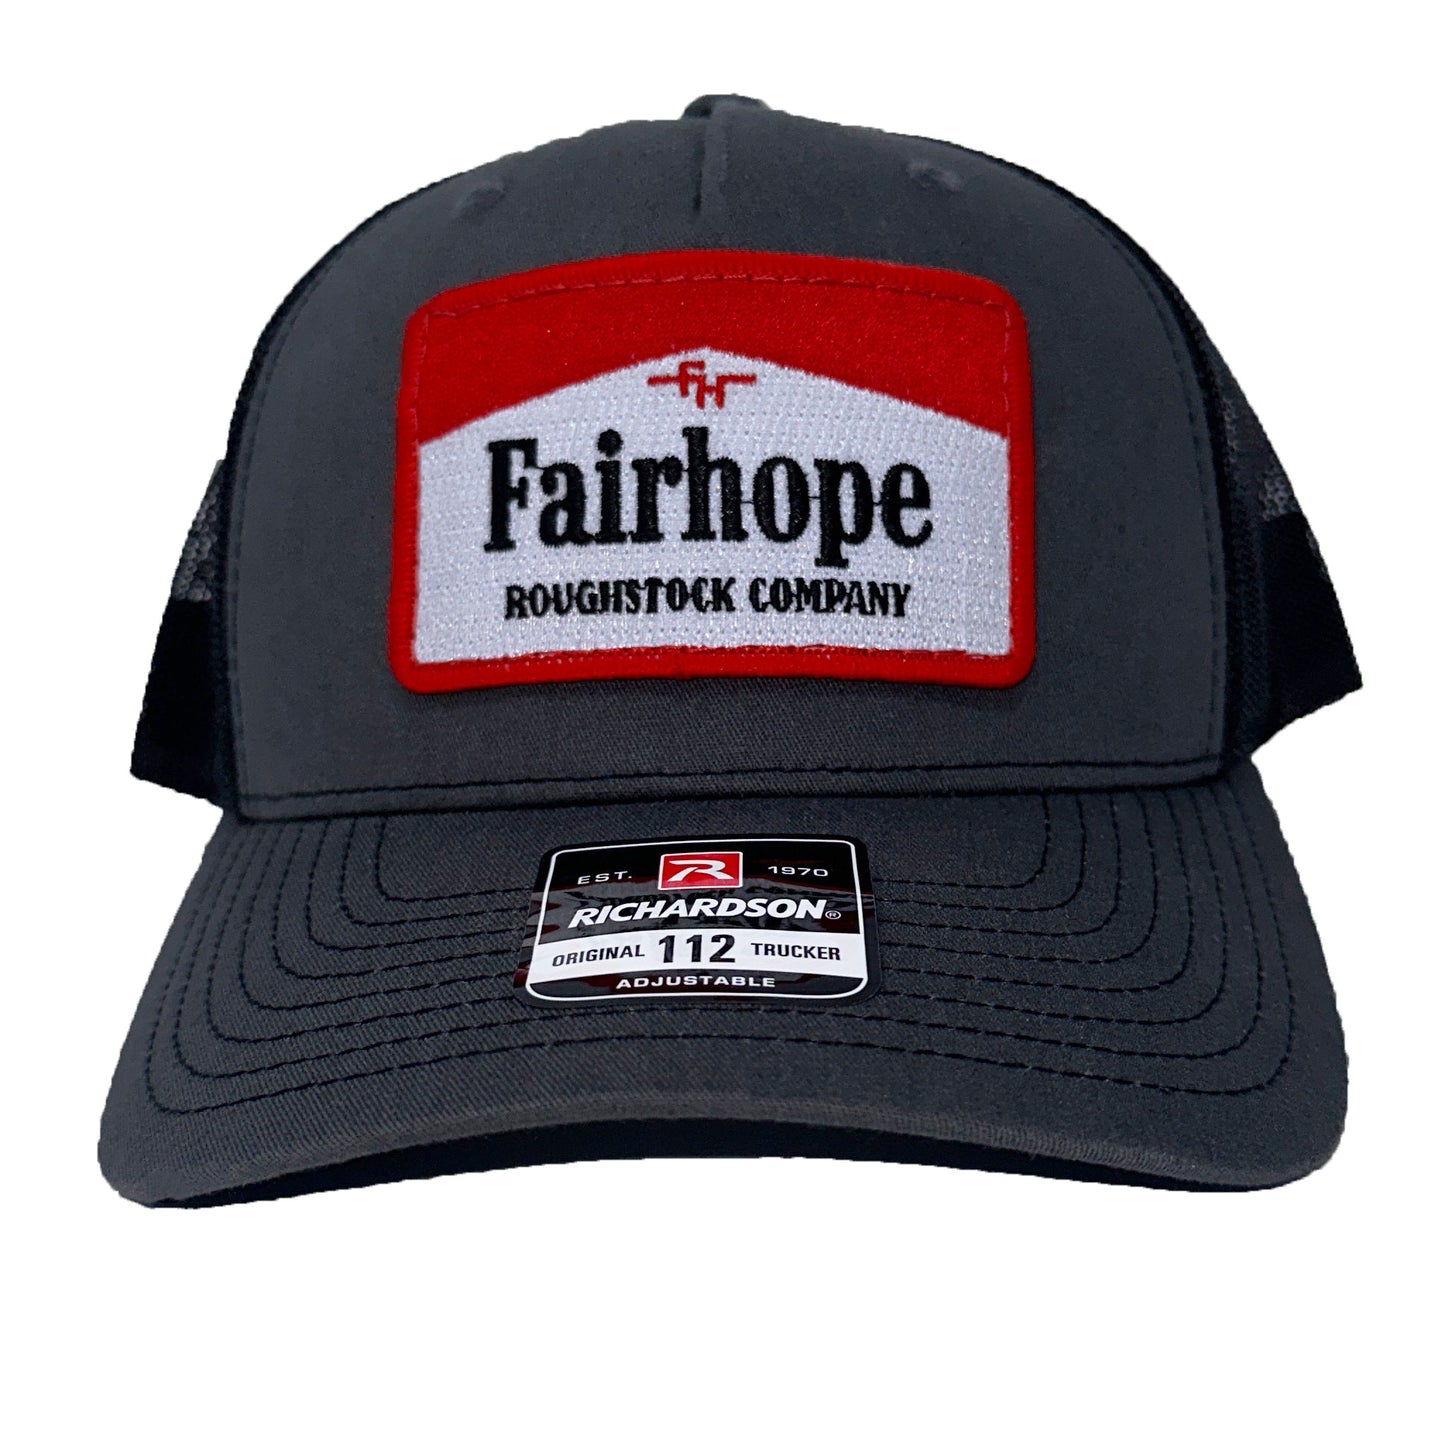 The “The Cowboy Killer” Trucker Hat - Charcoal/Black - Fairhope Roughstock Company